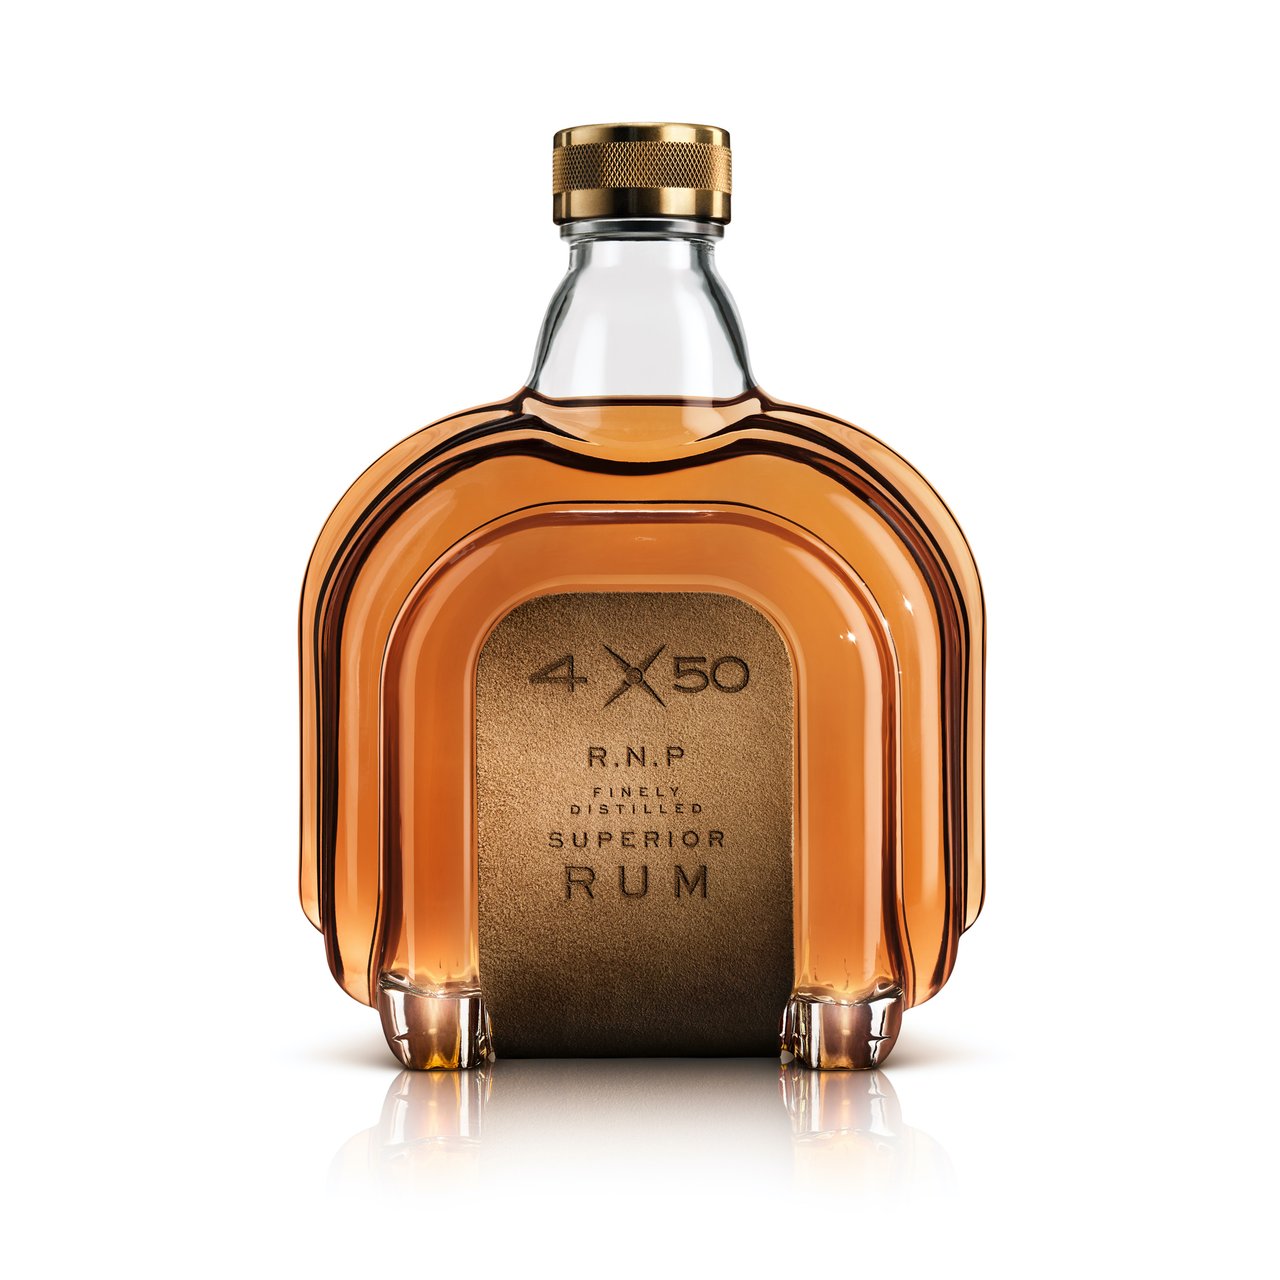 4X50 R.N.P. Finely Distilled Superior Rum 40,5% Vol. 0,7l in Giftbox